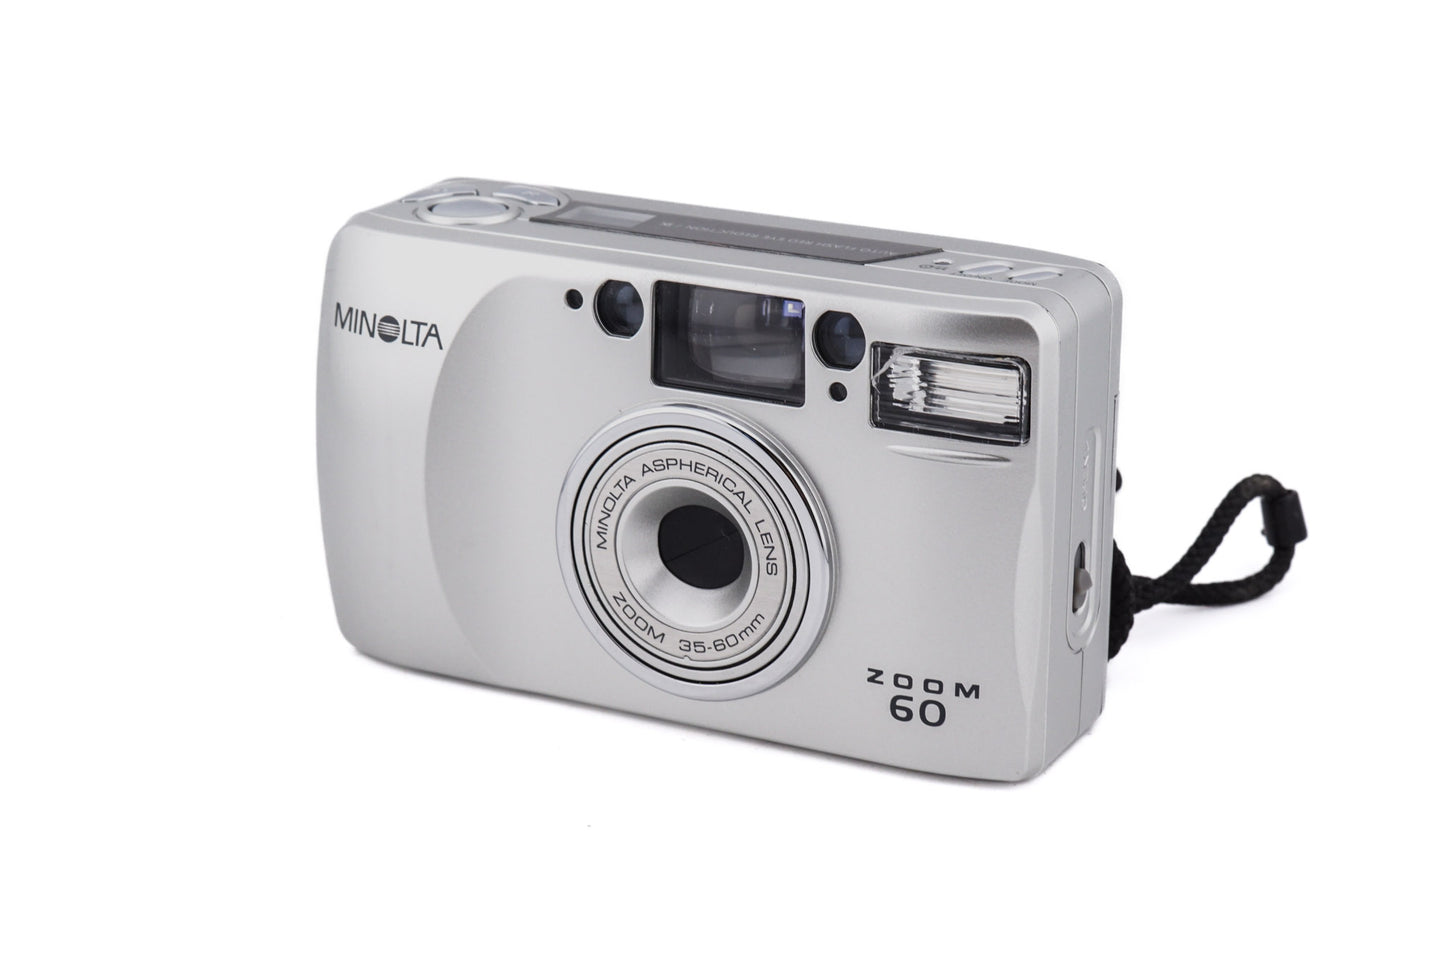 Minolta Zoom 60 - Camera